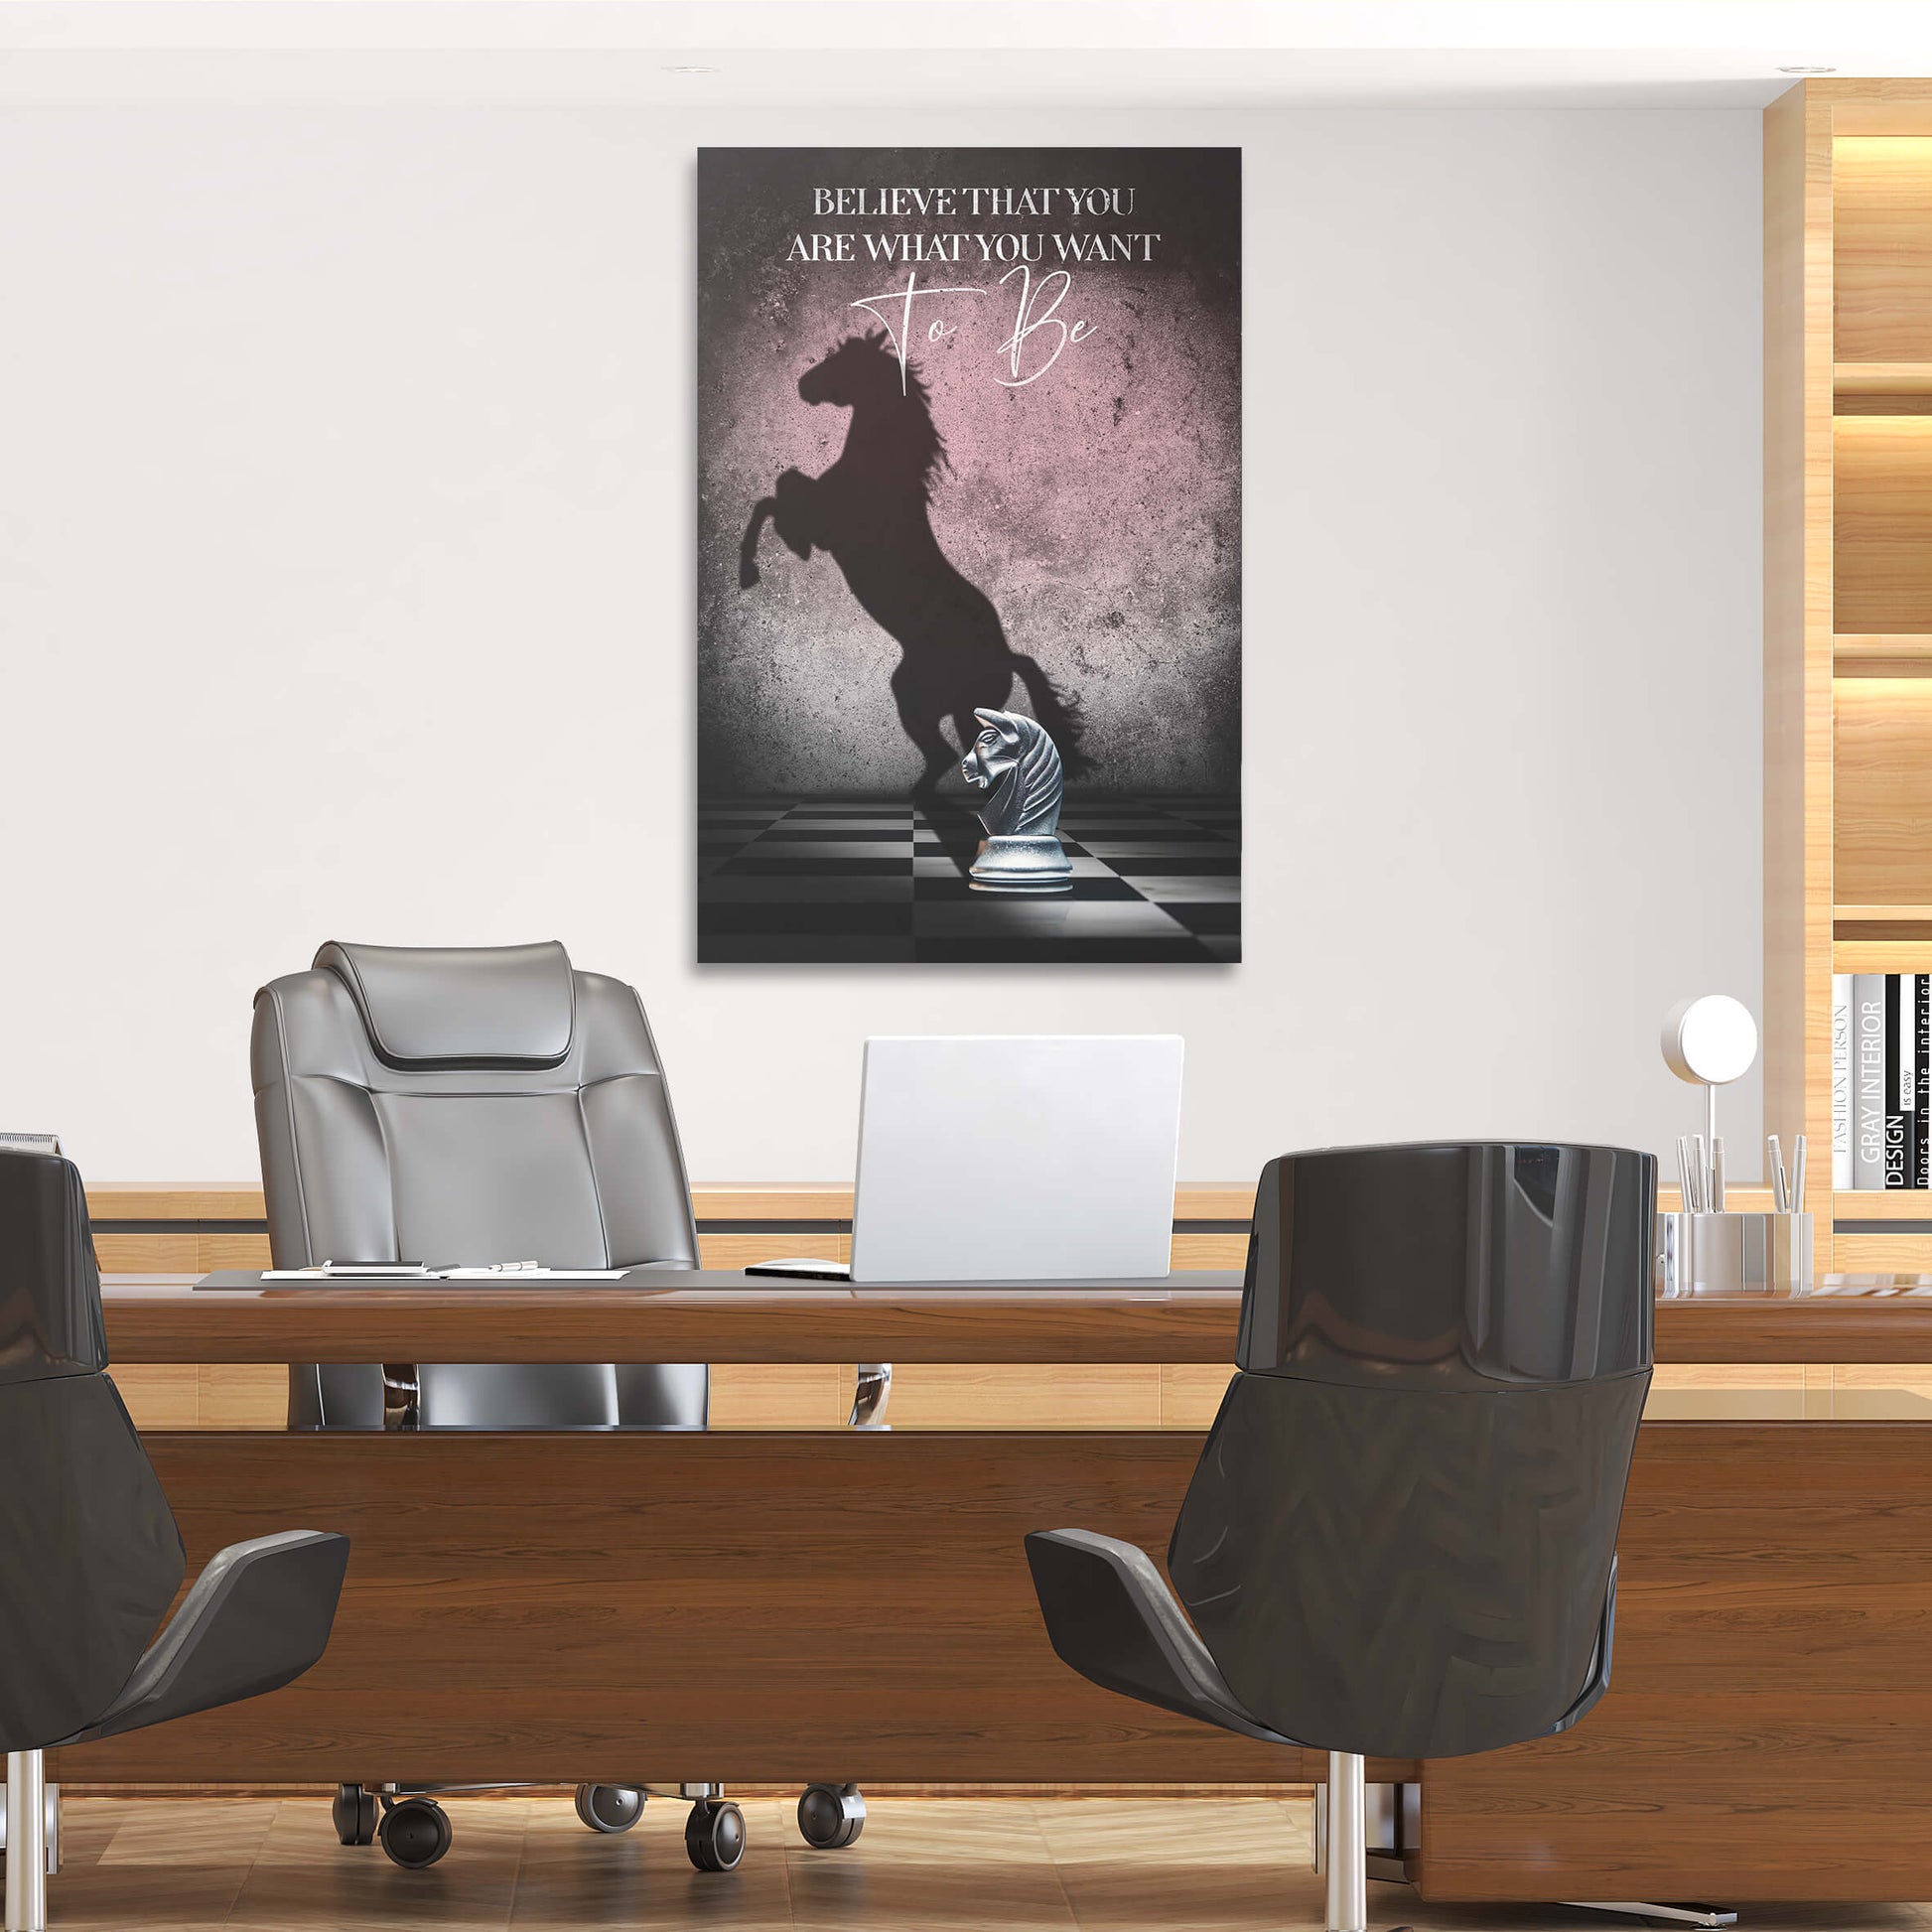 Believe you are - Neville Goddard Wall Art | Inspirational Wall Art Motivational Wall Art Quotes Office Art | ImpaktMaker Exclusive Canvas Art Portrait